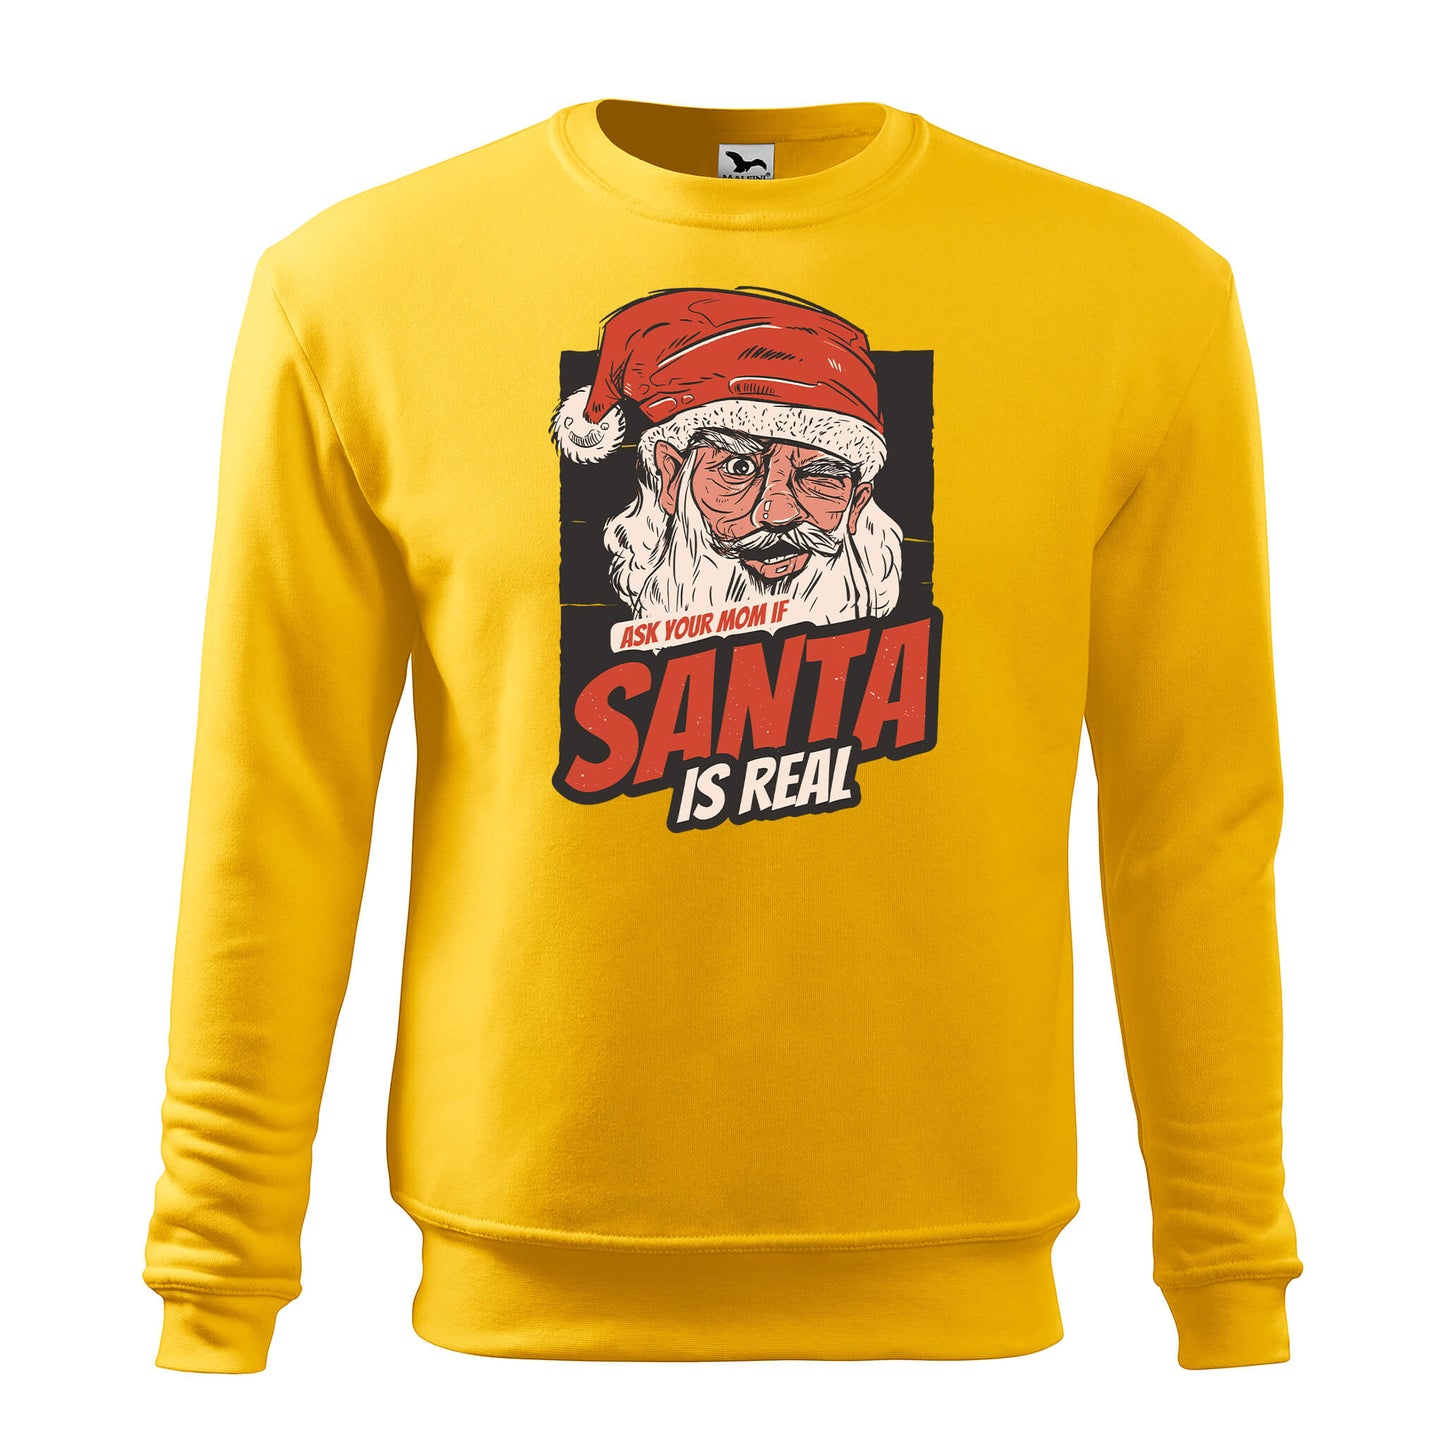 Ask your mom if santa is real sweatshirt - mens